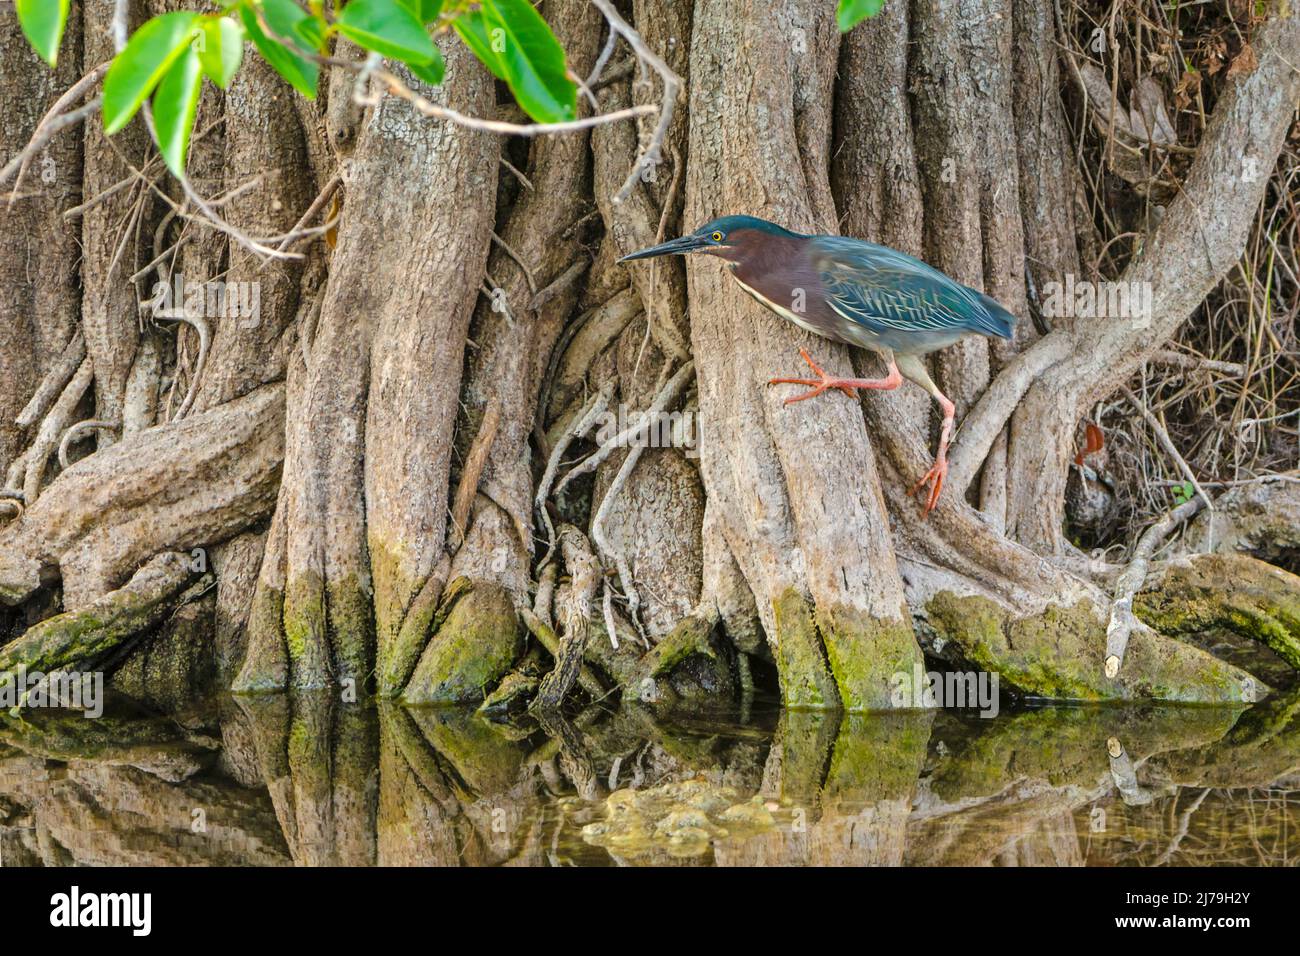 Heron vert (Butorides virescens). Parc national des Everglades, Floride. Banque D'Images